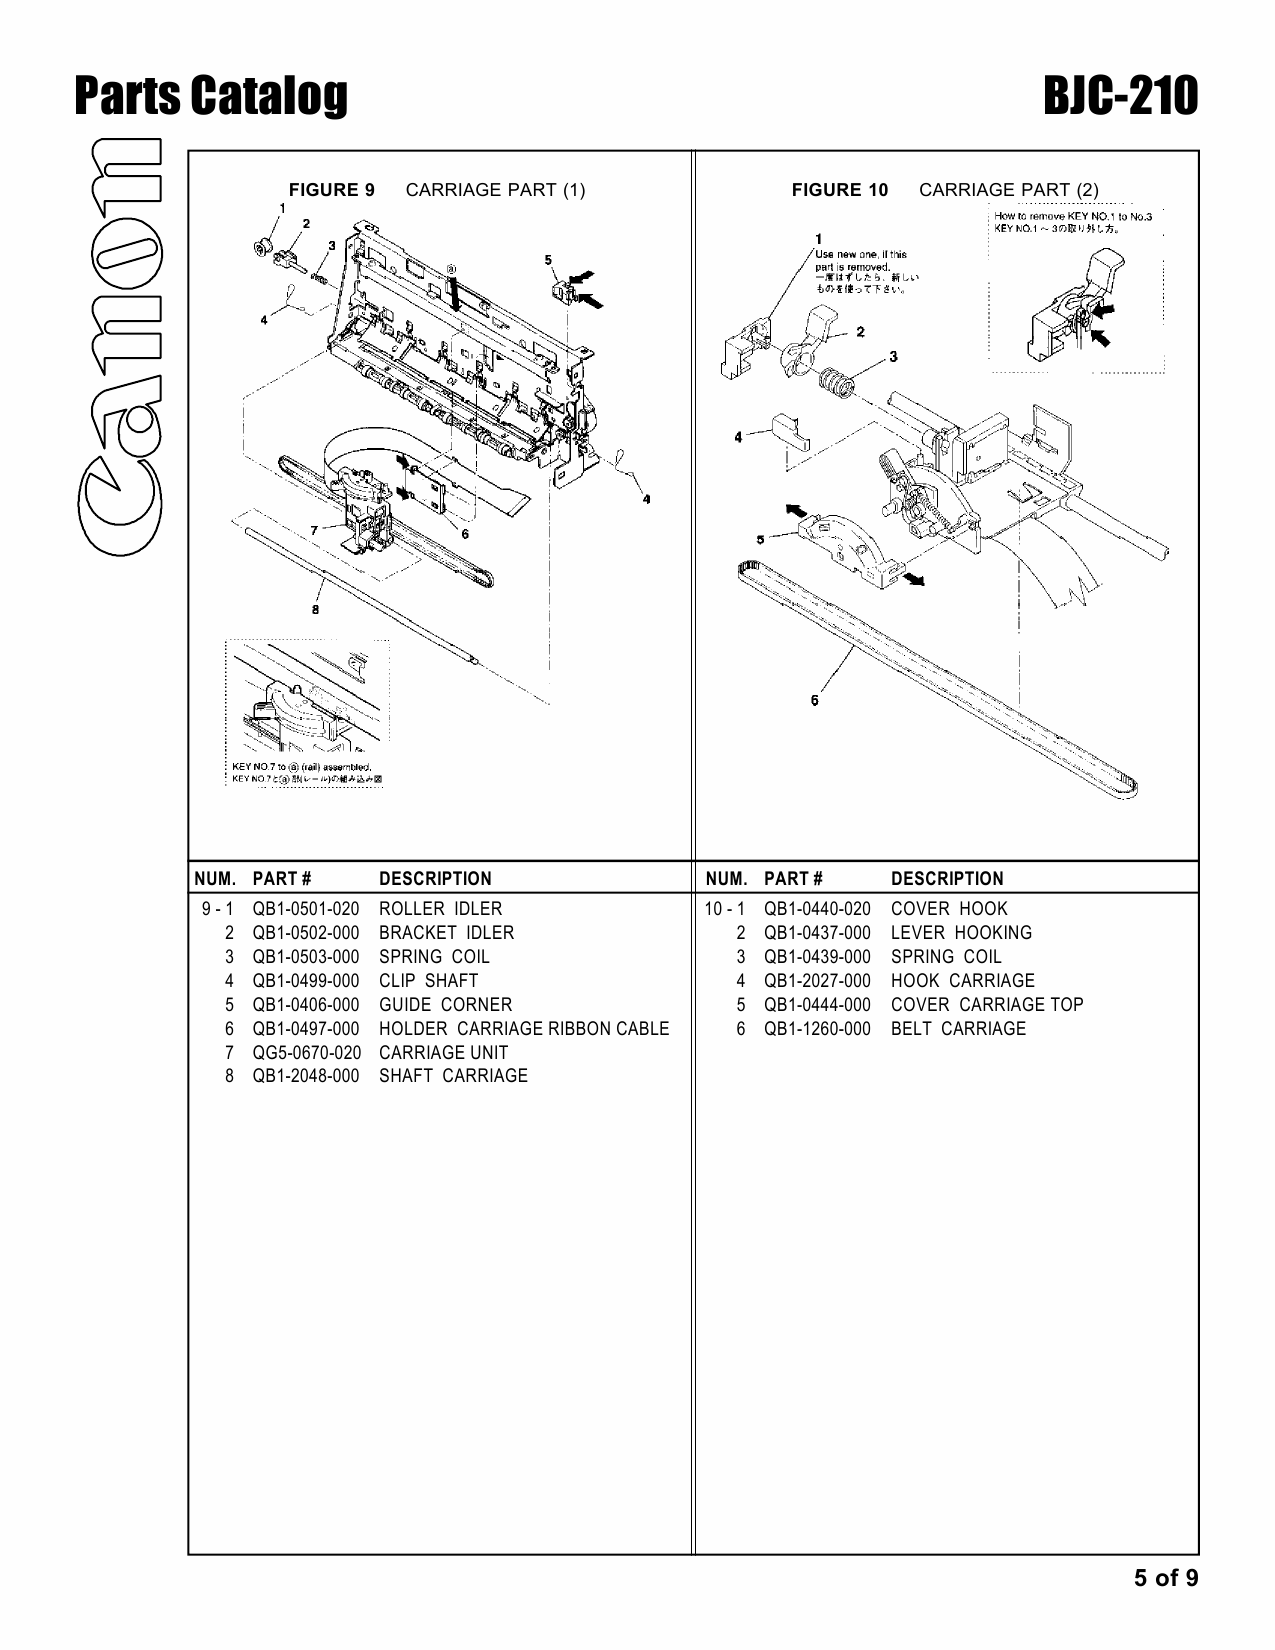 Canon BubbleJet BJC-210 Parts Catalog Manual-5